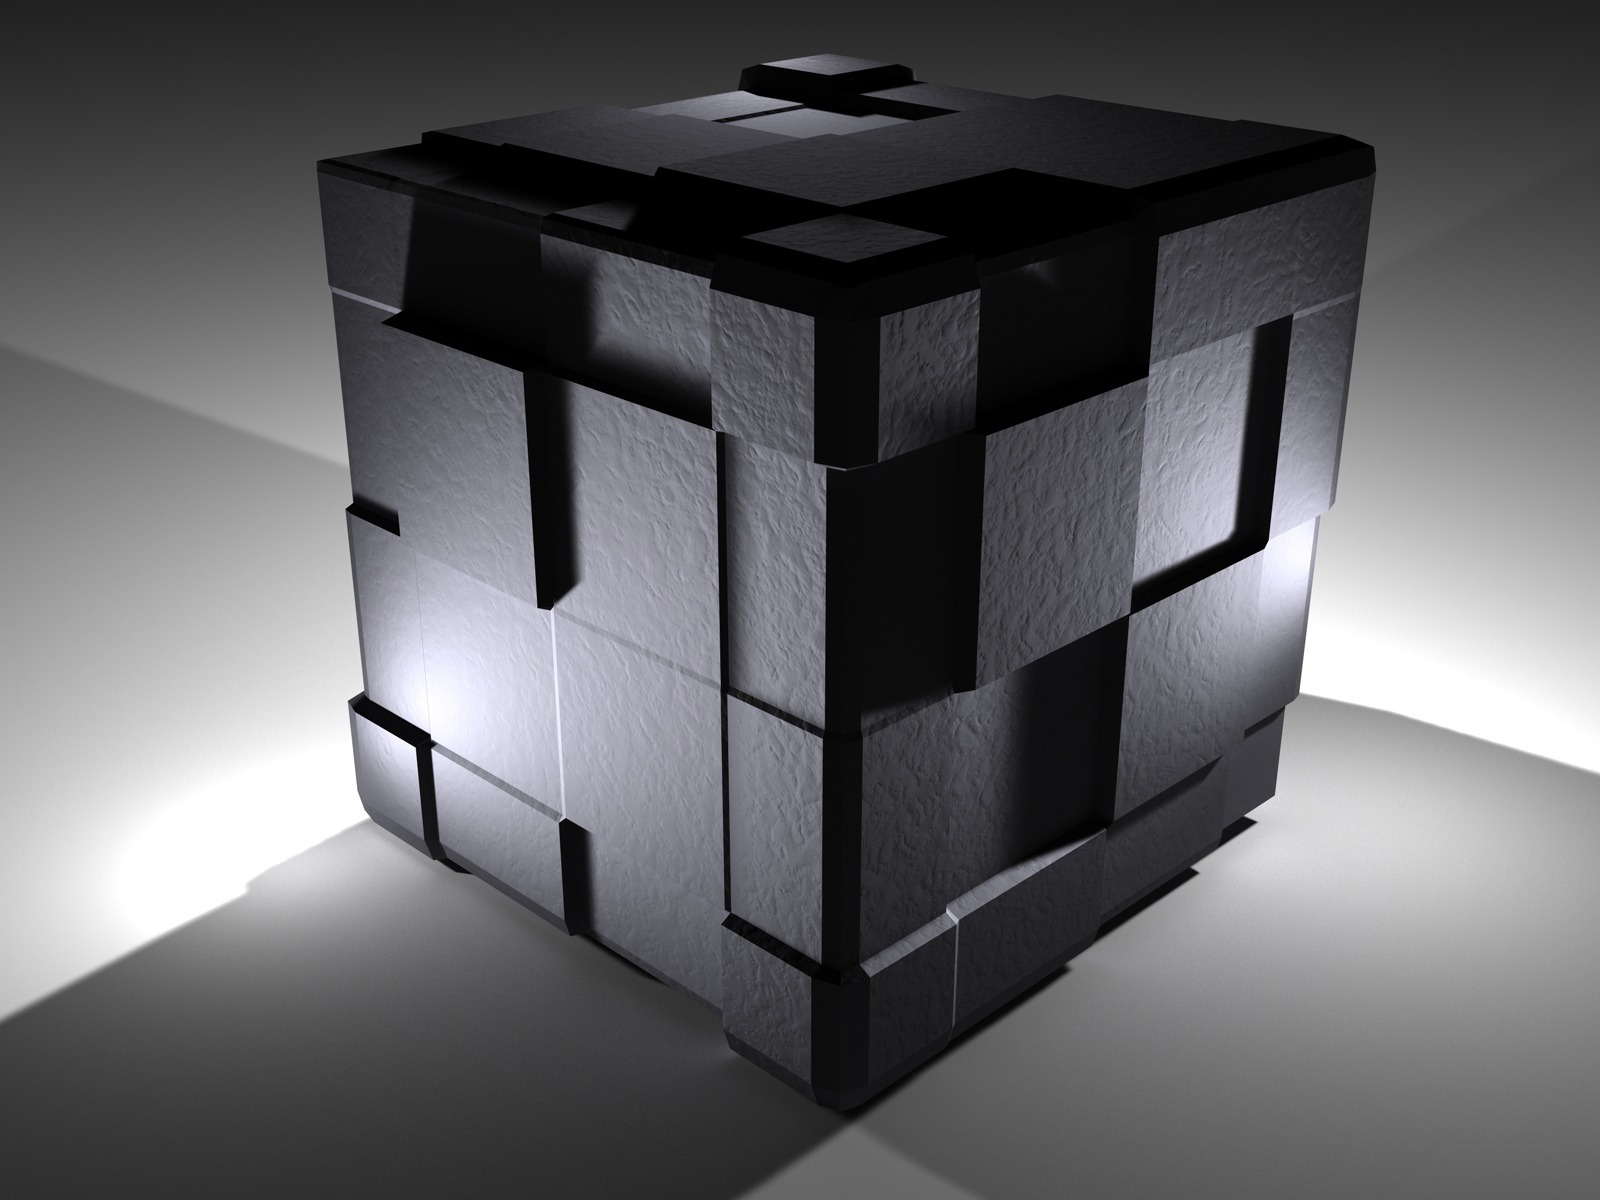 The Black Cube